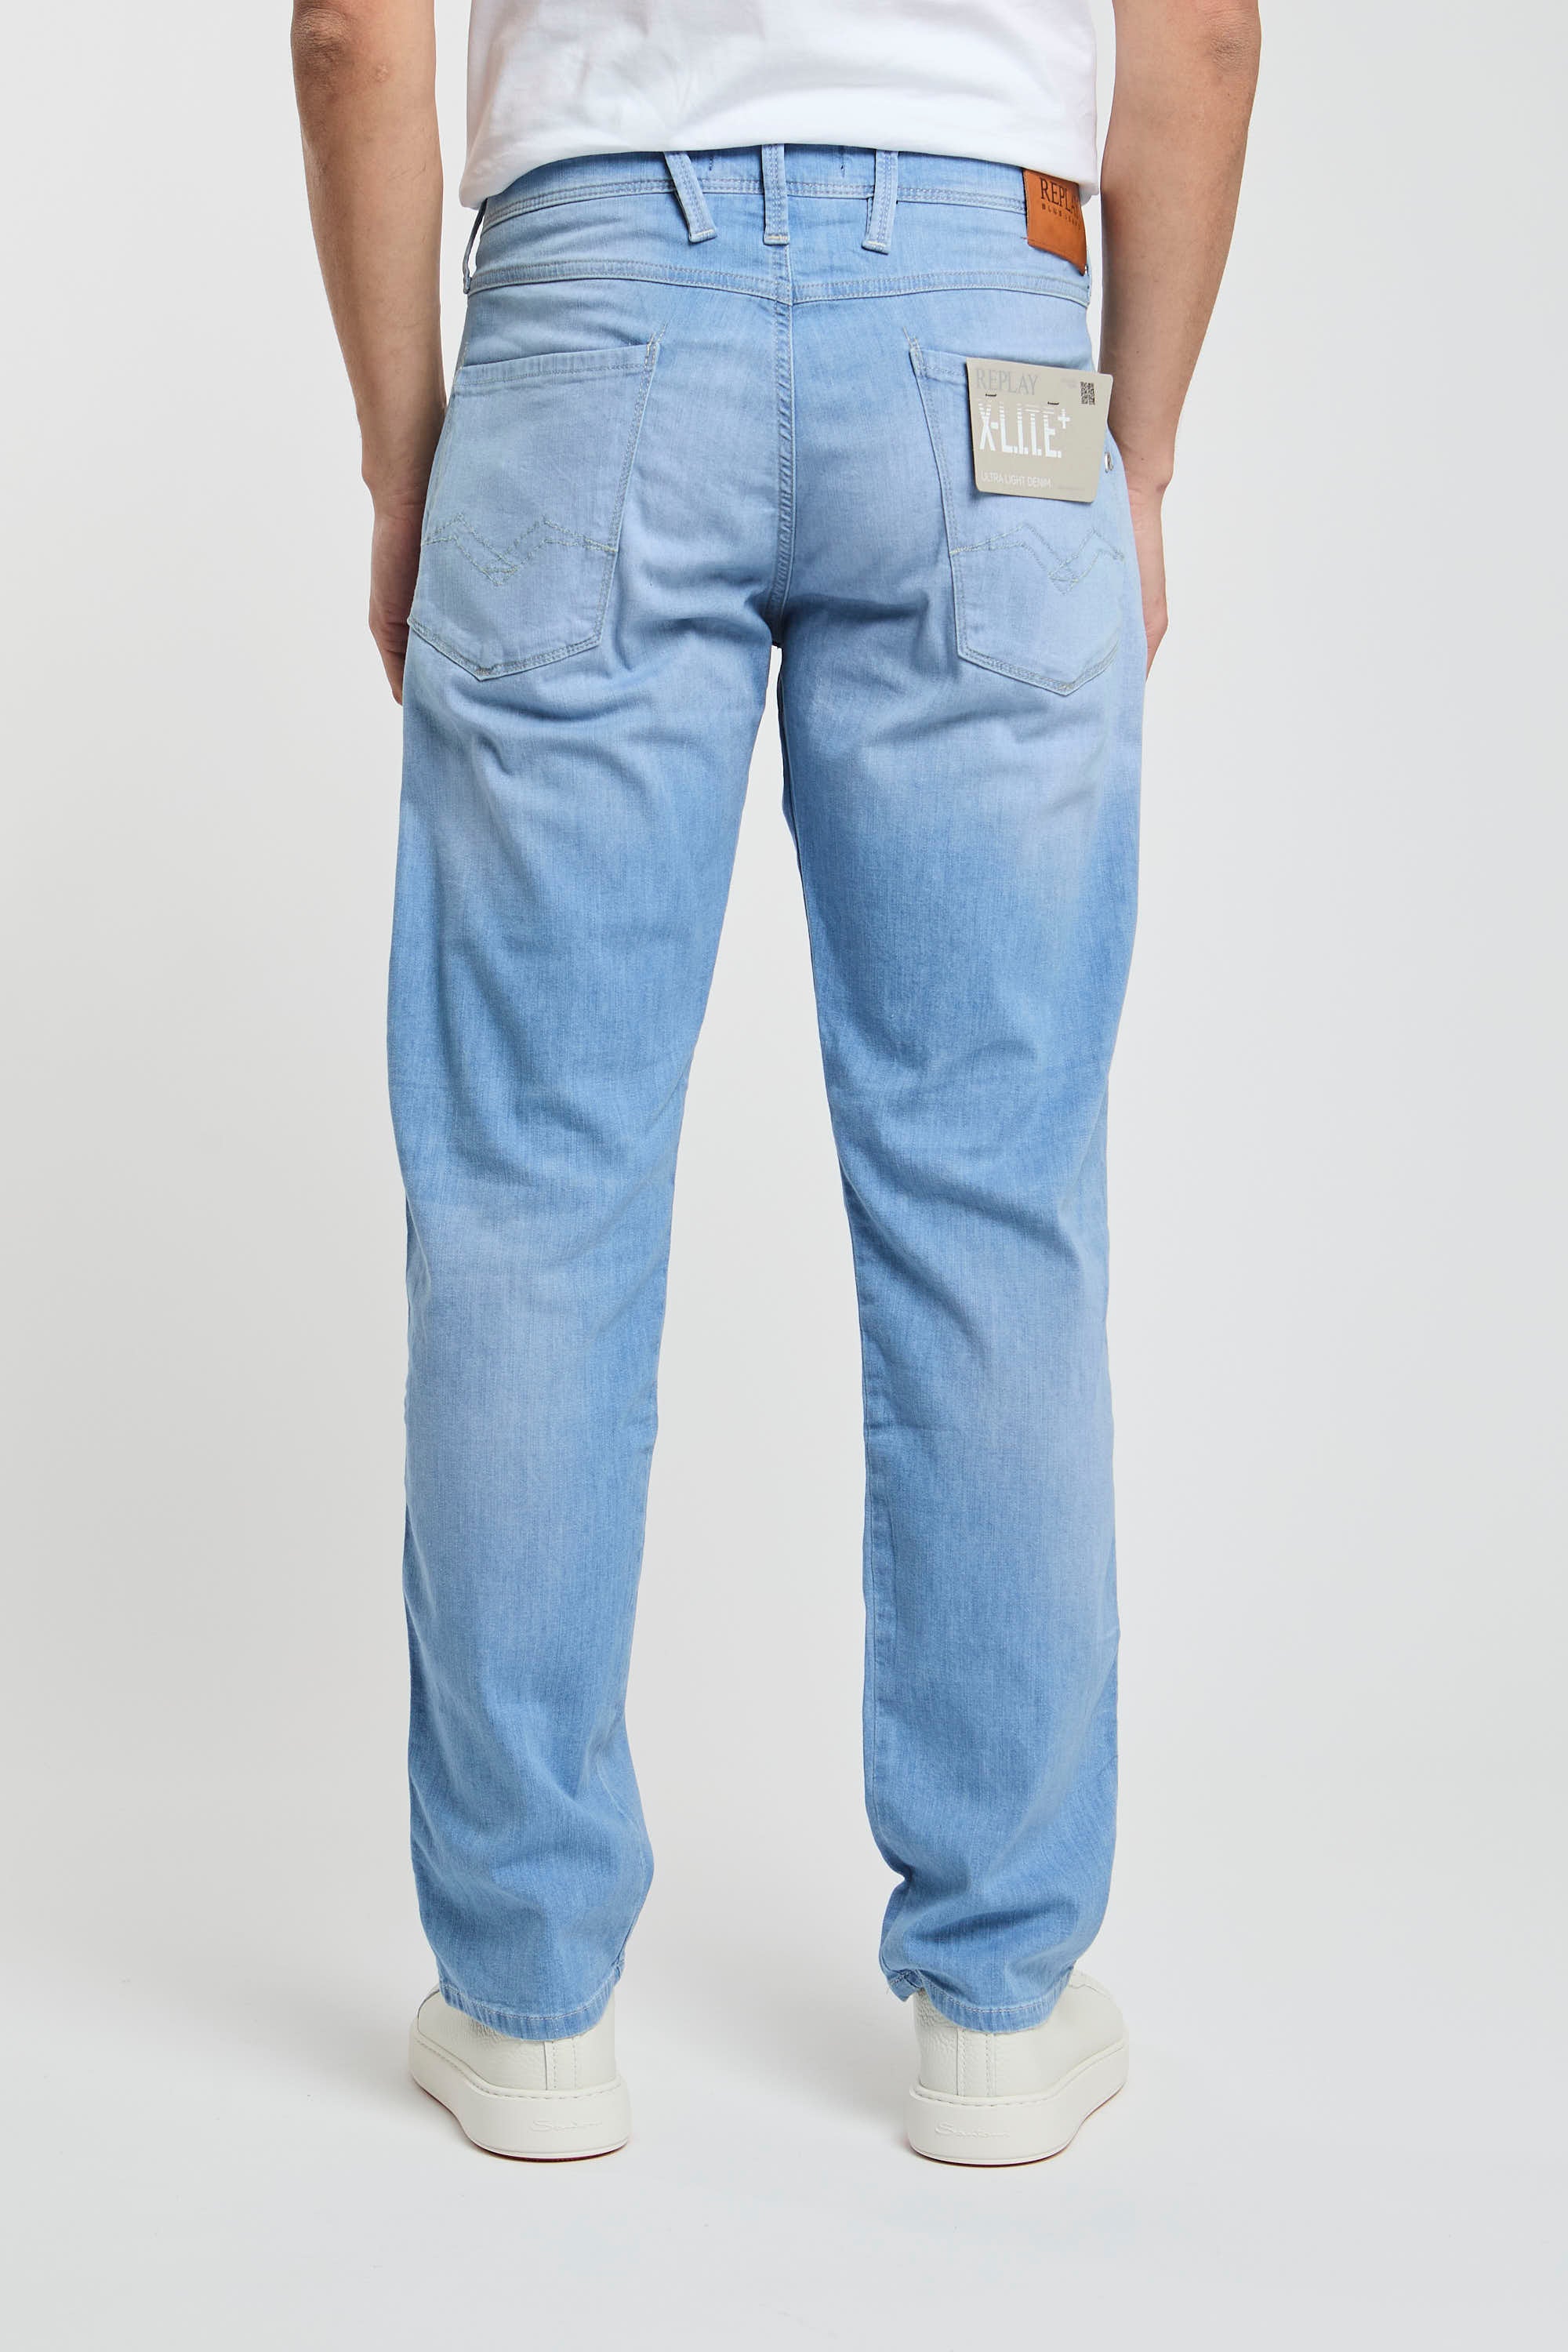 Replay Light Blue Slim Fit Jeans Cotton/Lyocell/Elastomultiester/Elastane-5